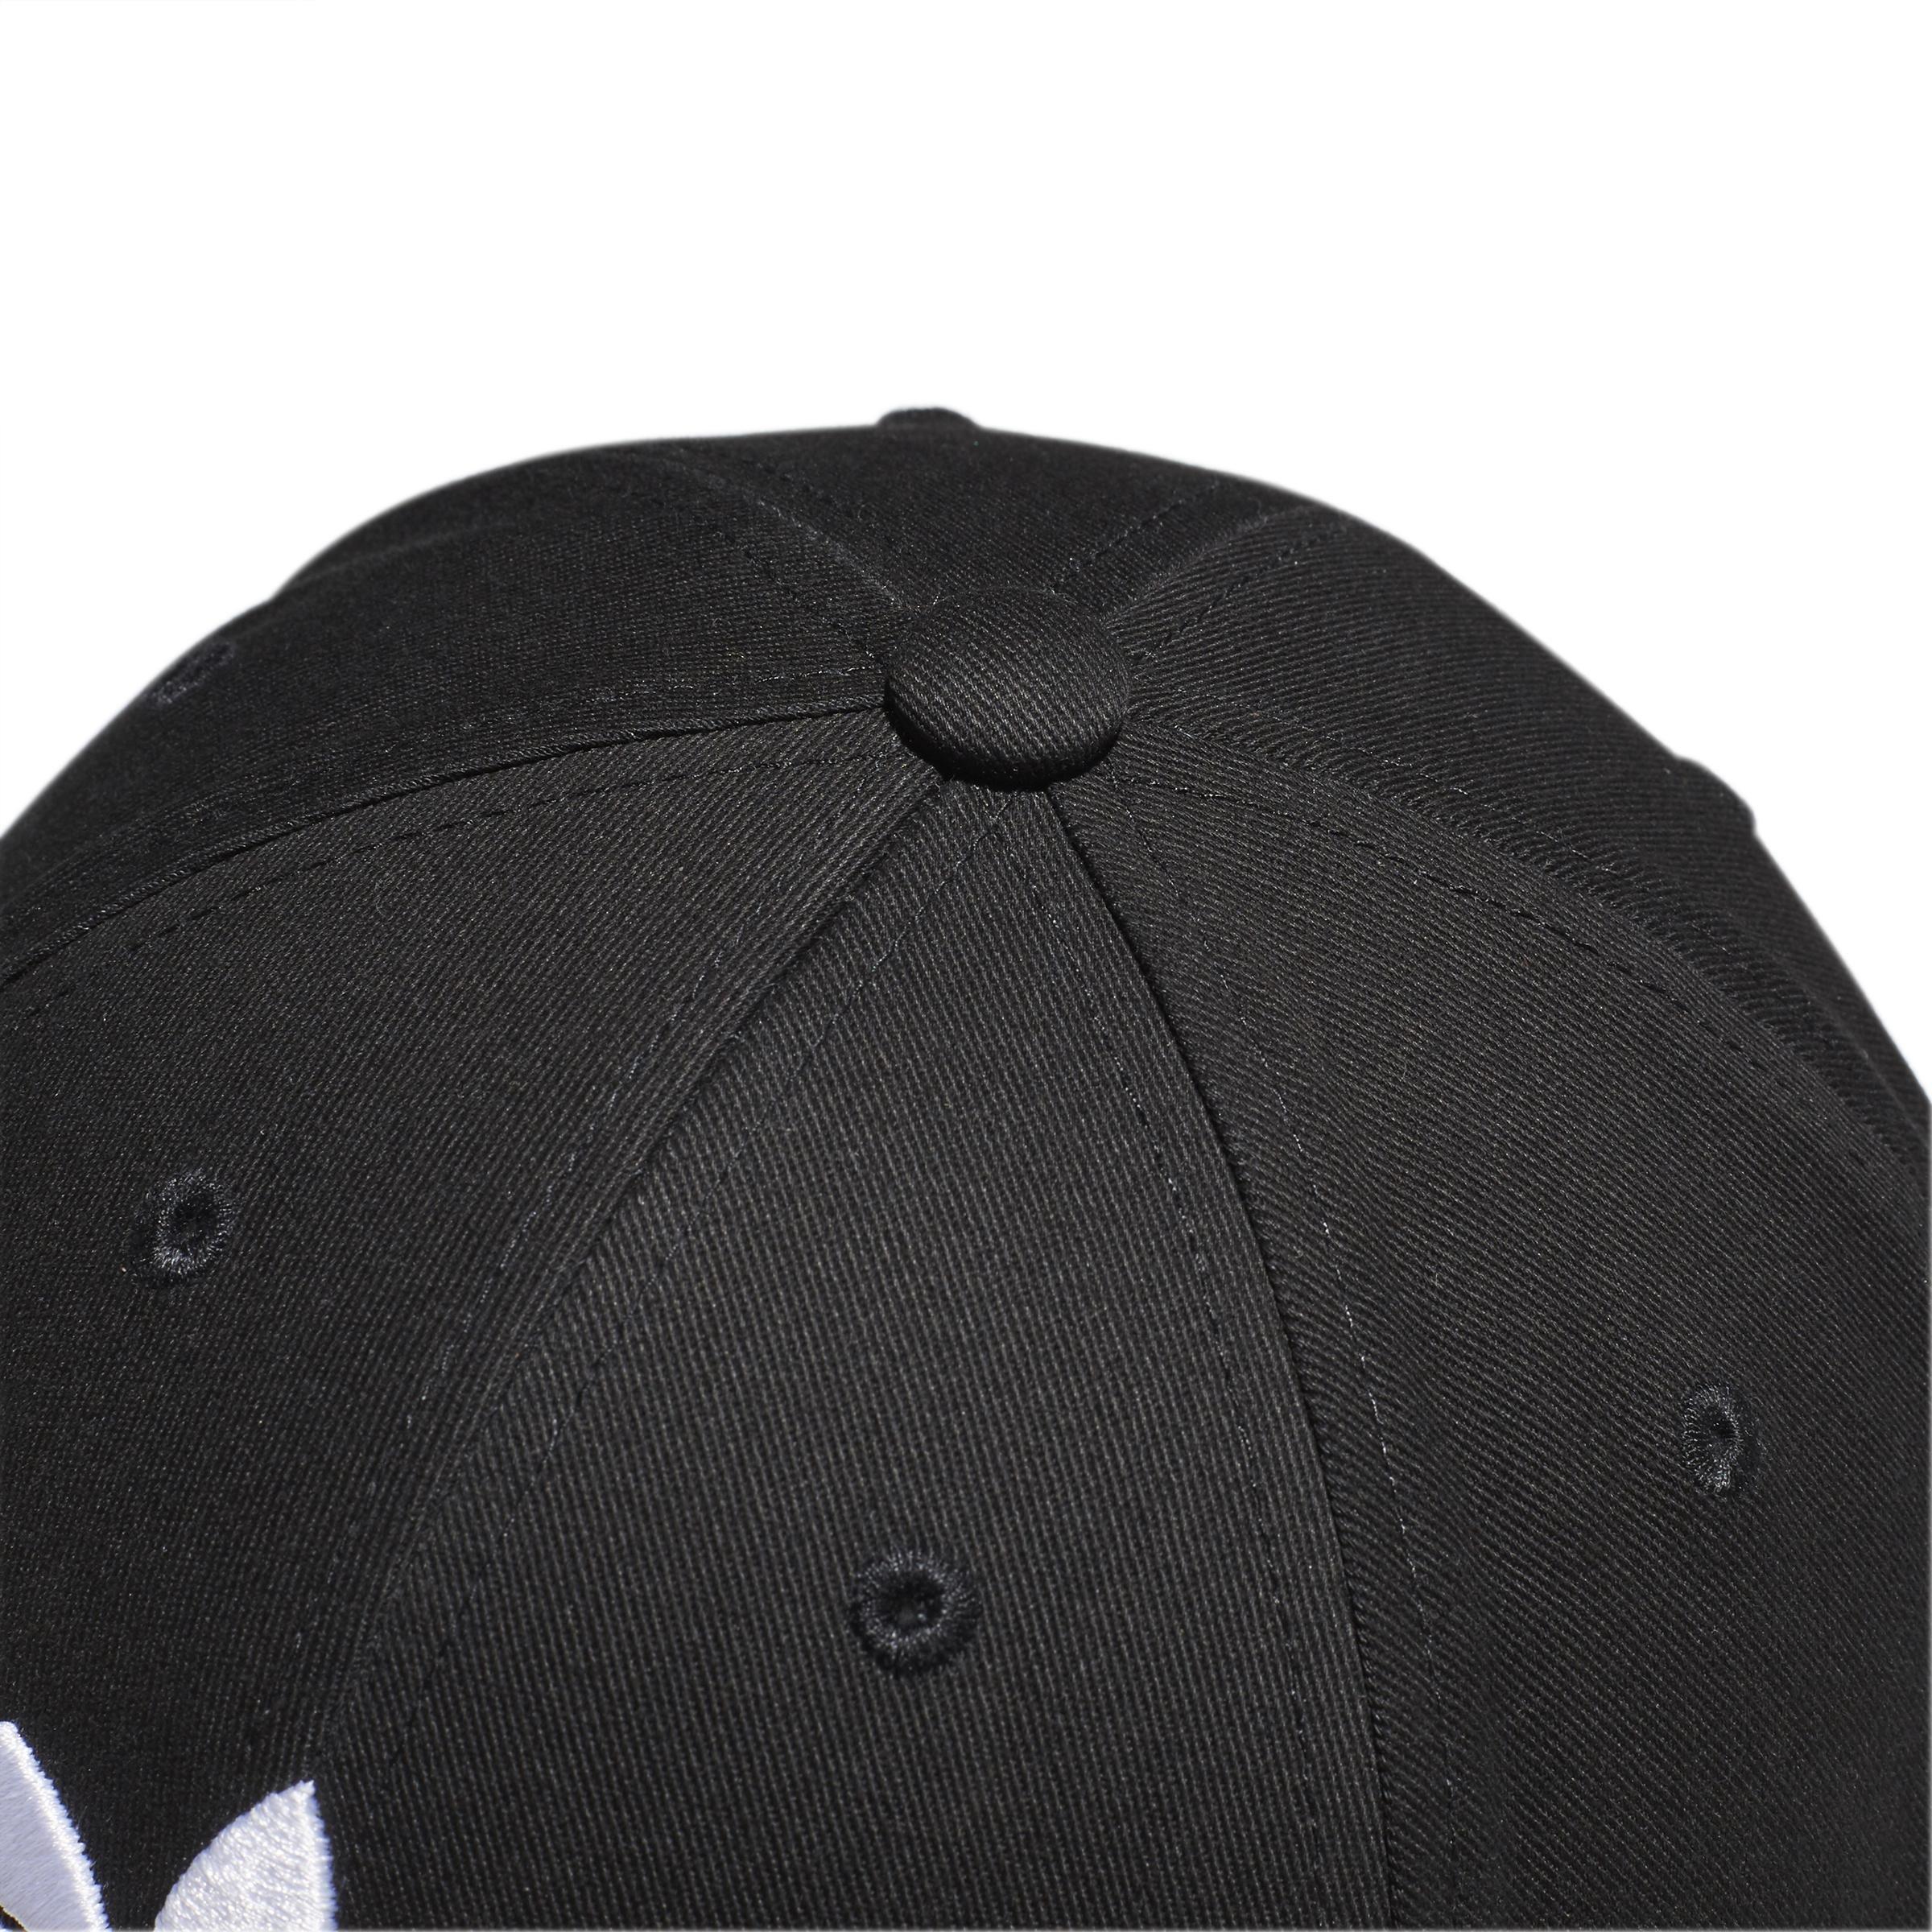 adidas - Unisex Trefoil Baseball Cap, Black